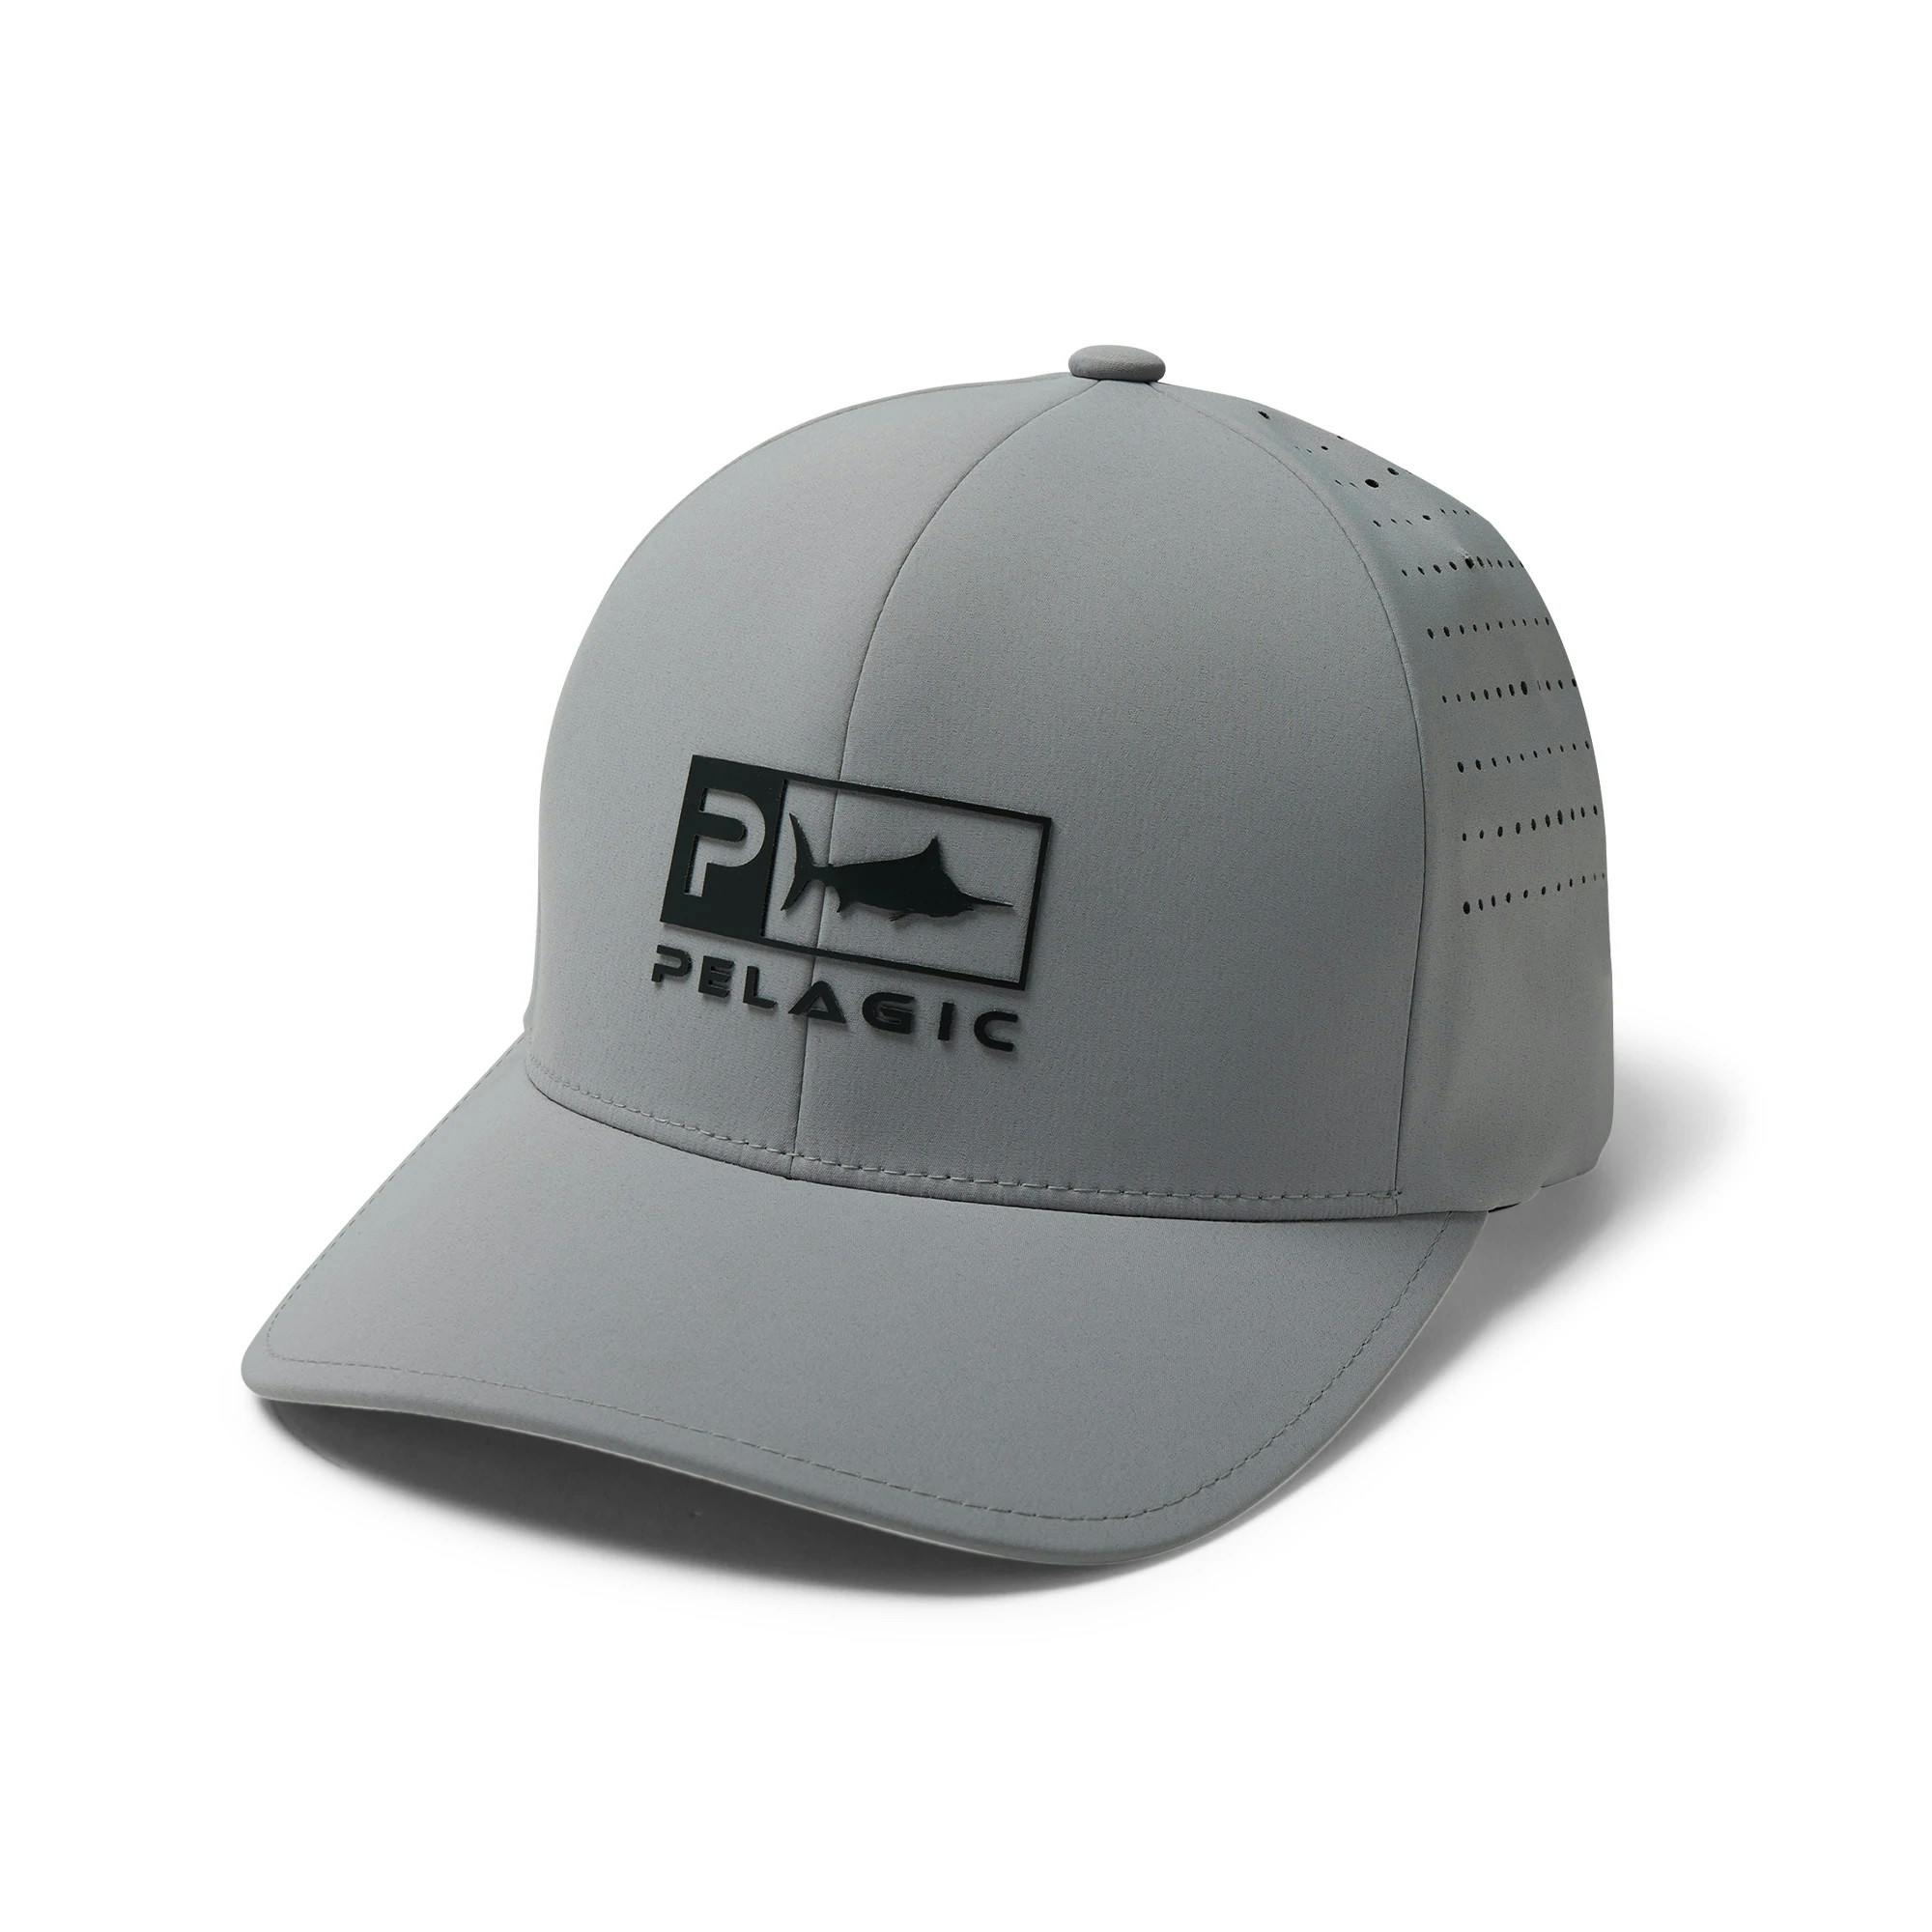 Pelagic Flexfit Delta Icon Fishing Hat Angle - Light Gray